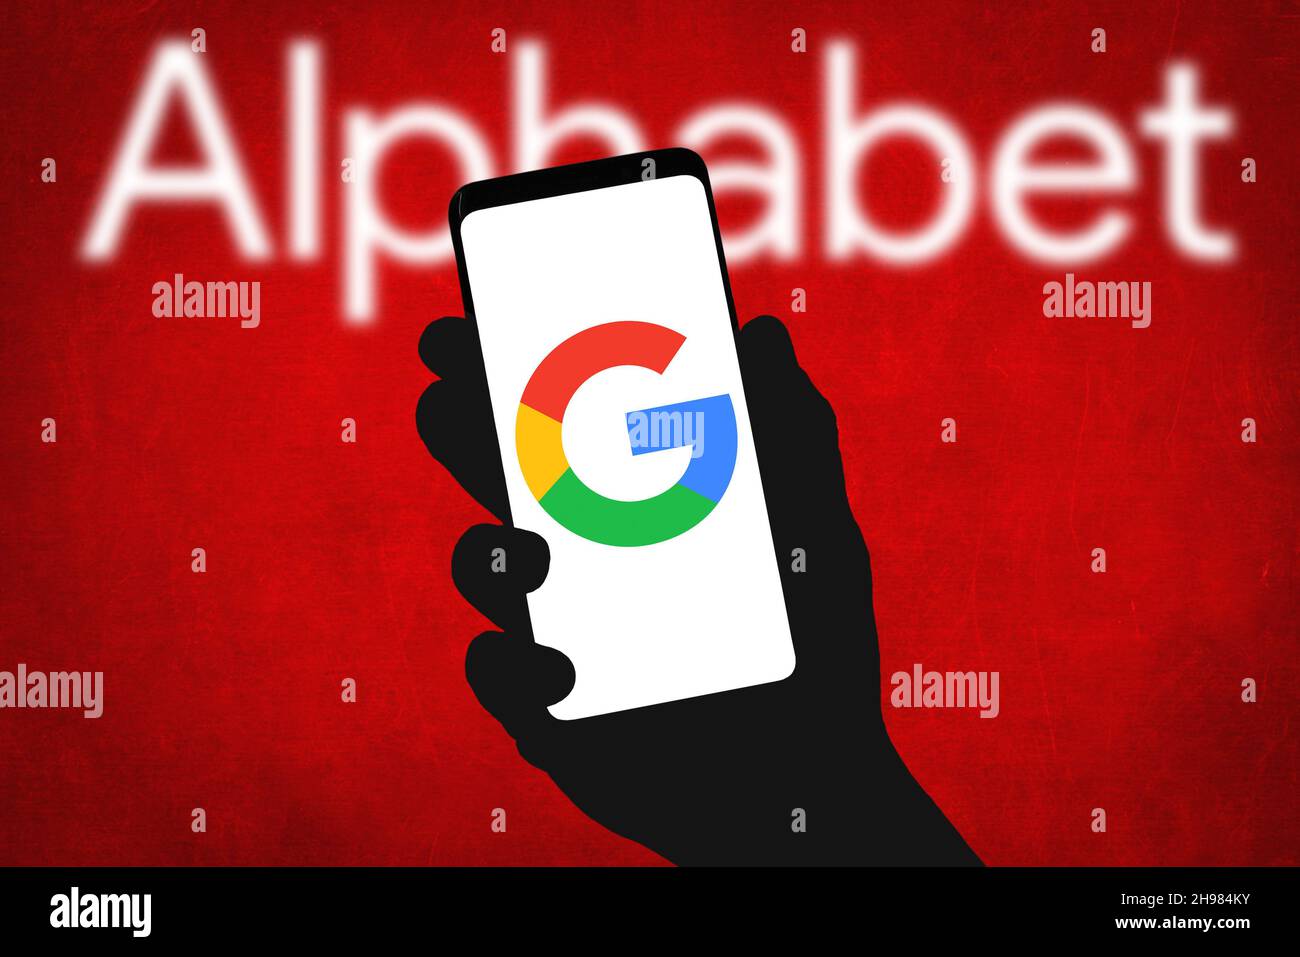 Alphabet Google logo Stock Photo